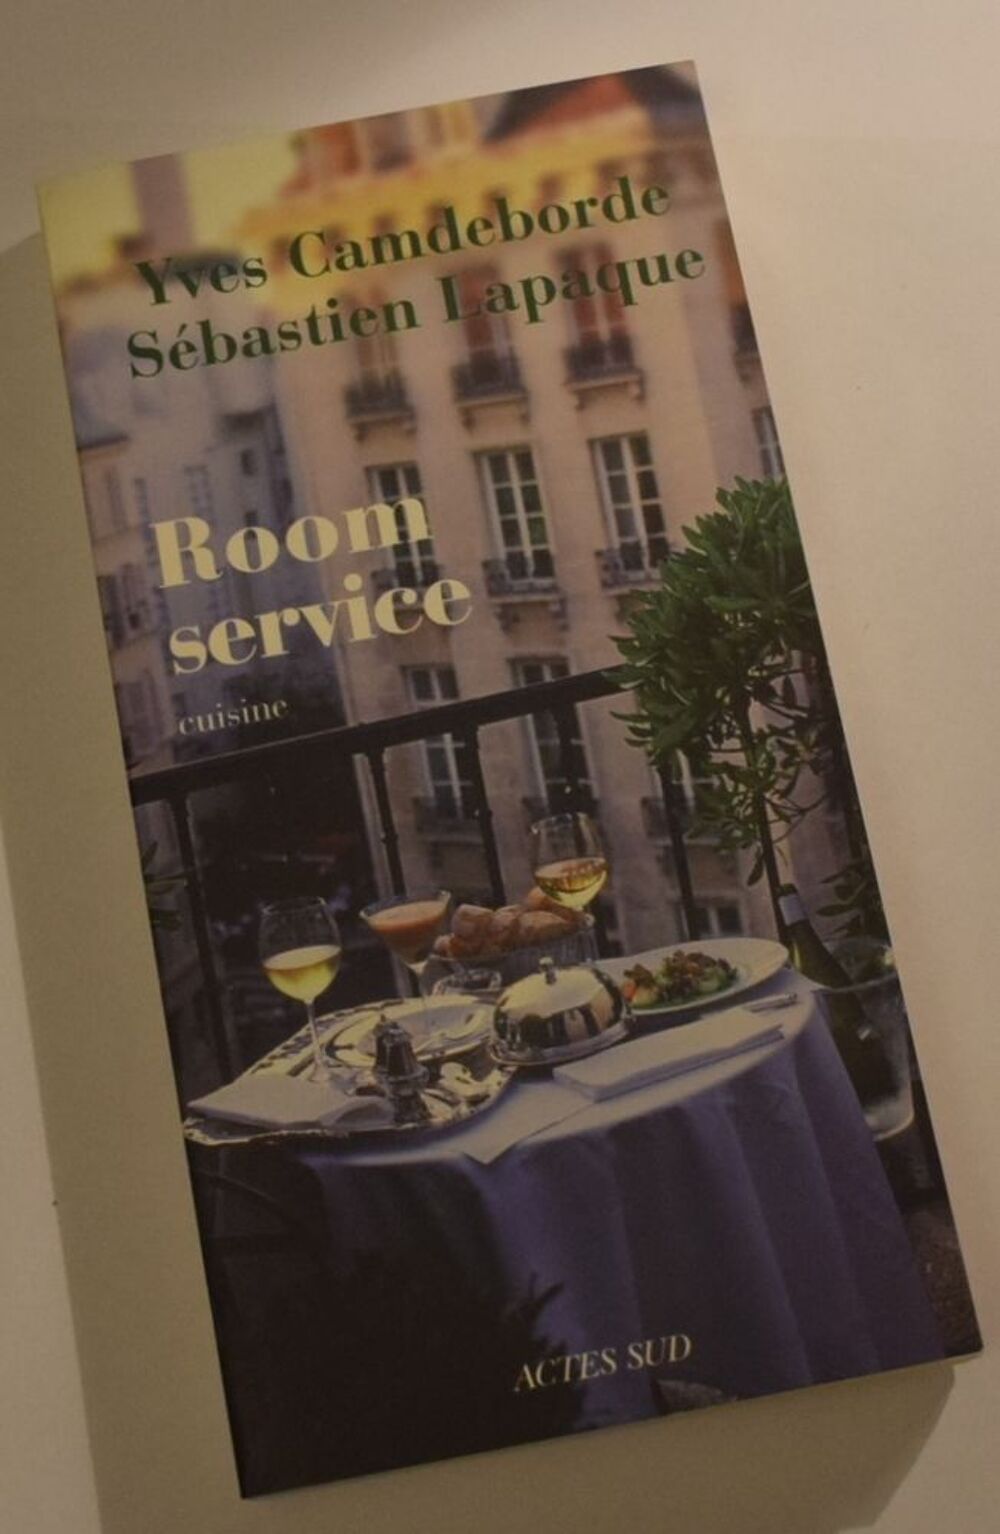 Room Service - Cuisine - Yves Camdeborde - 2007 Livres et BD